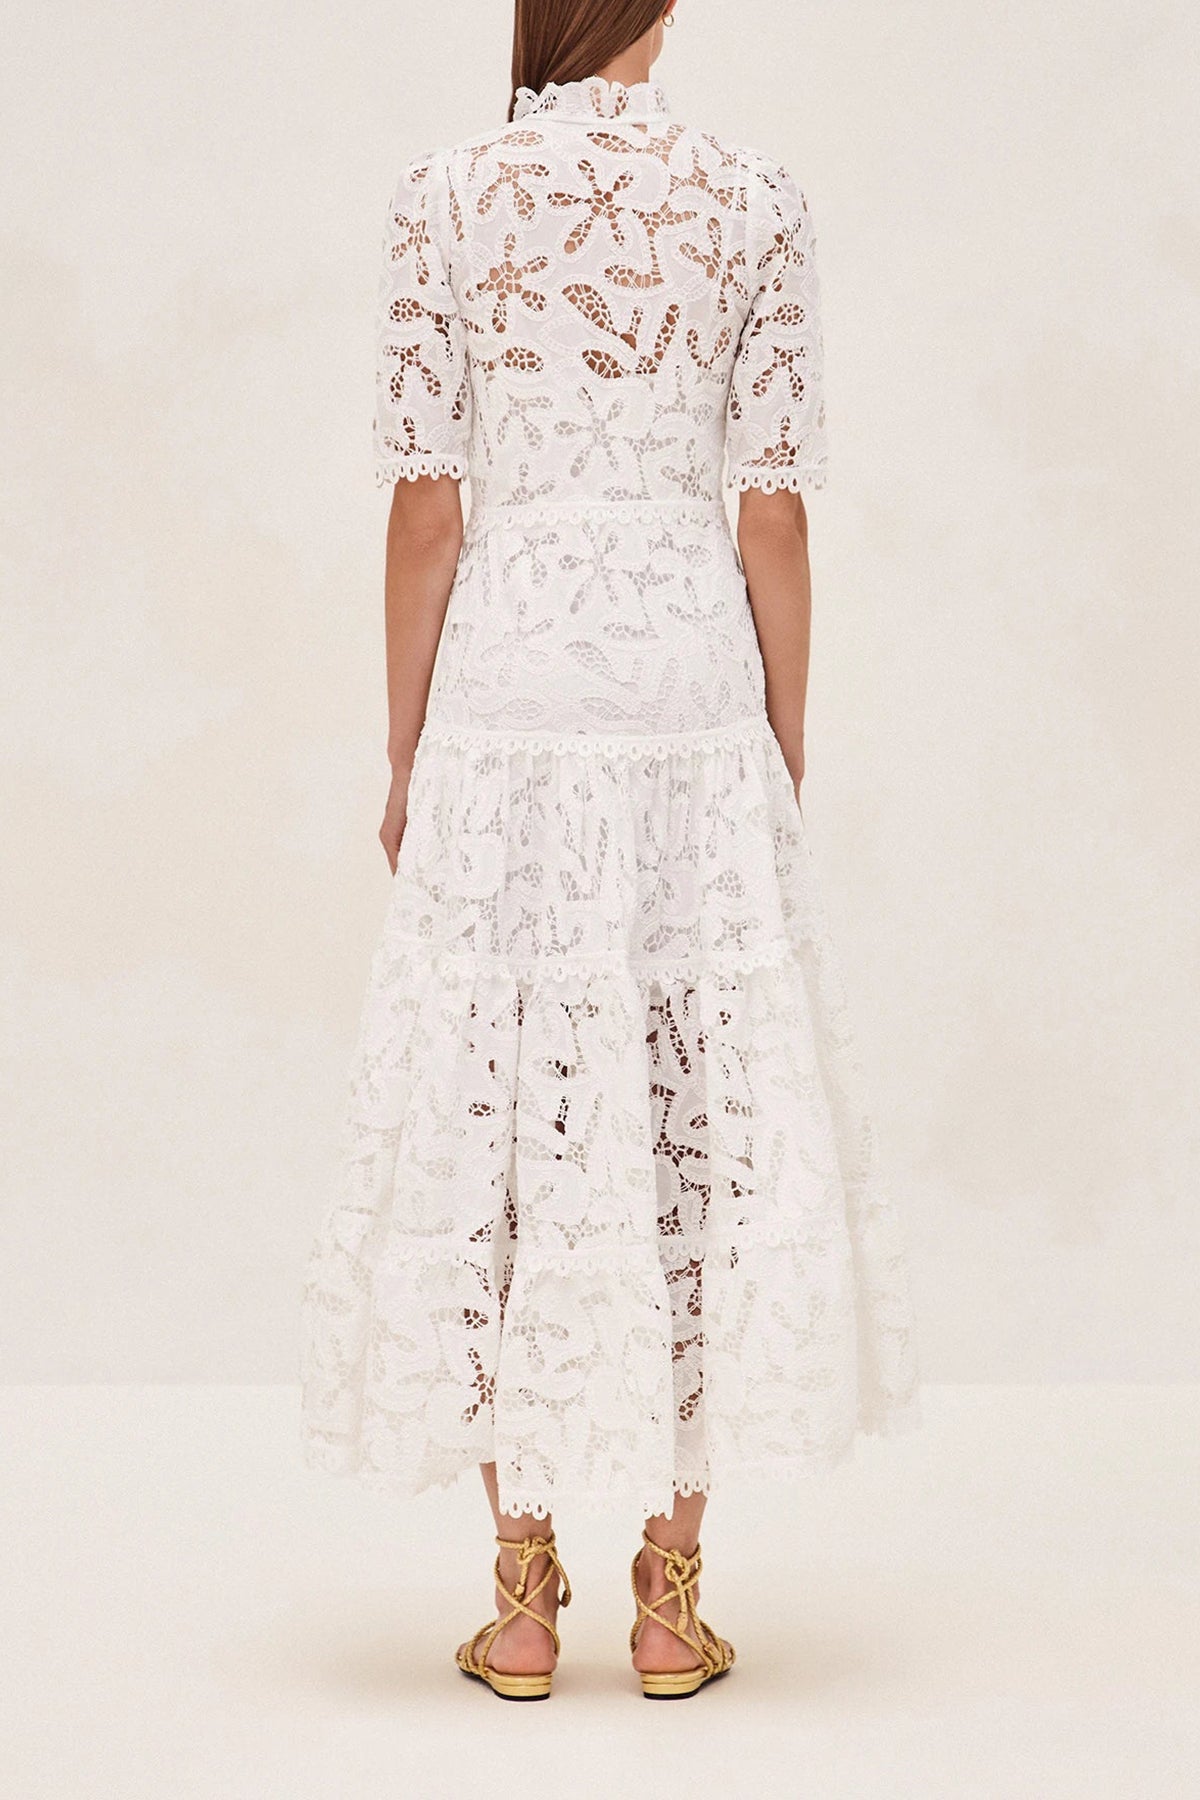 Ledina Dress in White - shop-olivia.com